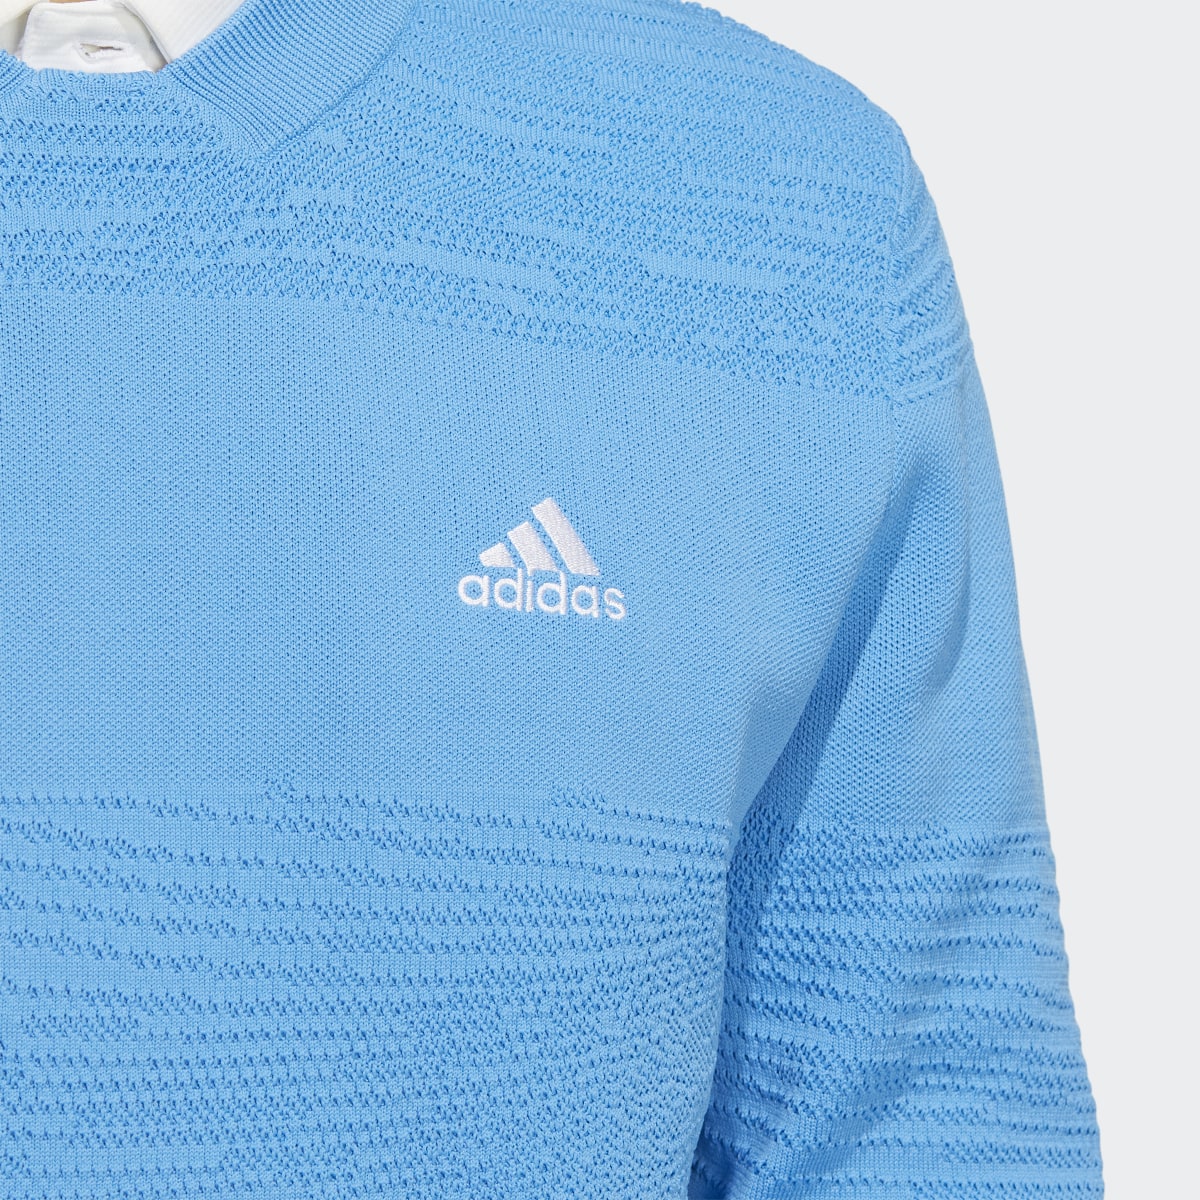 Adidas Made to be Remade Crewneck Sweatshirt. 6